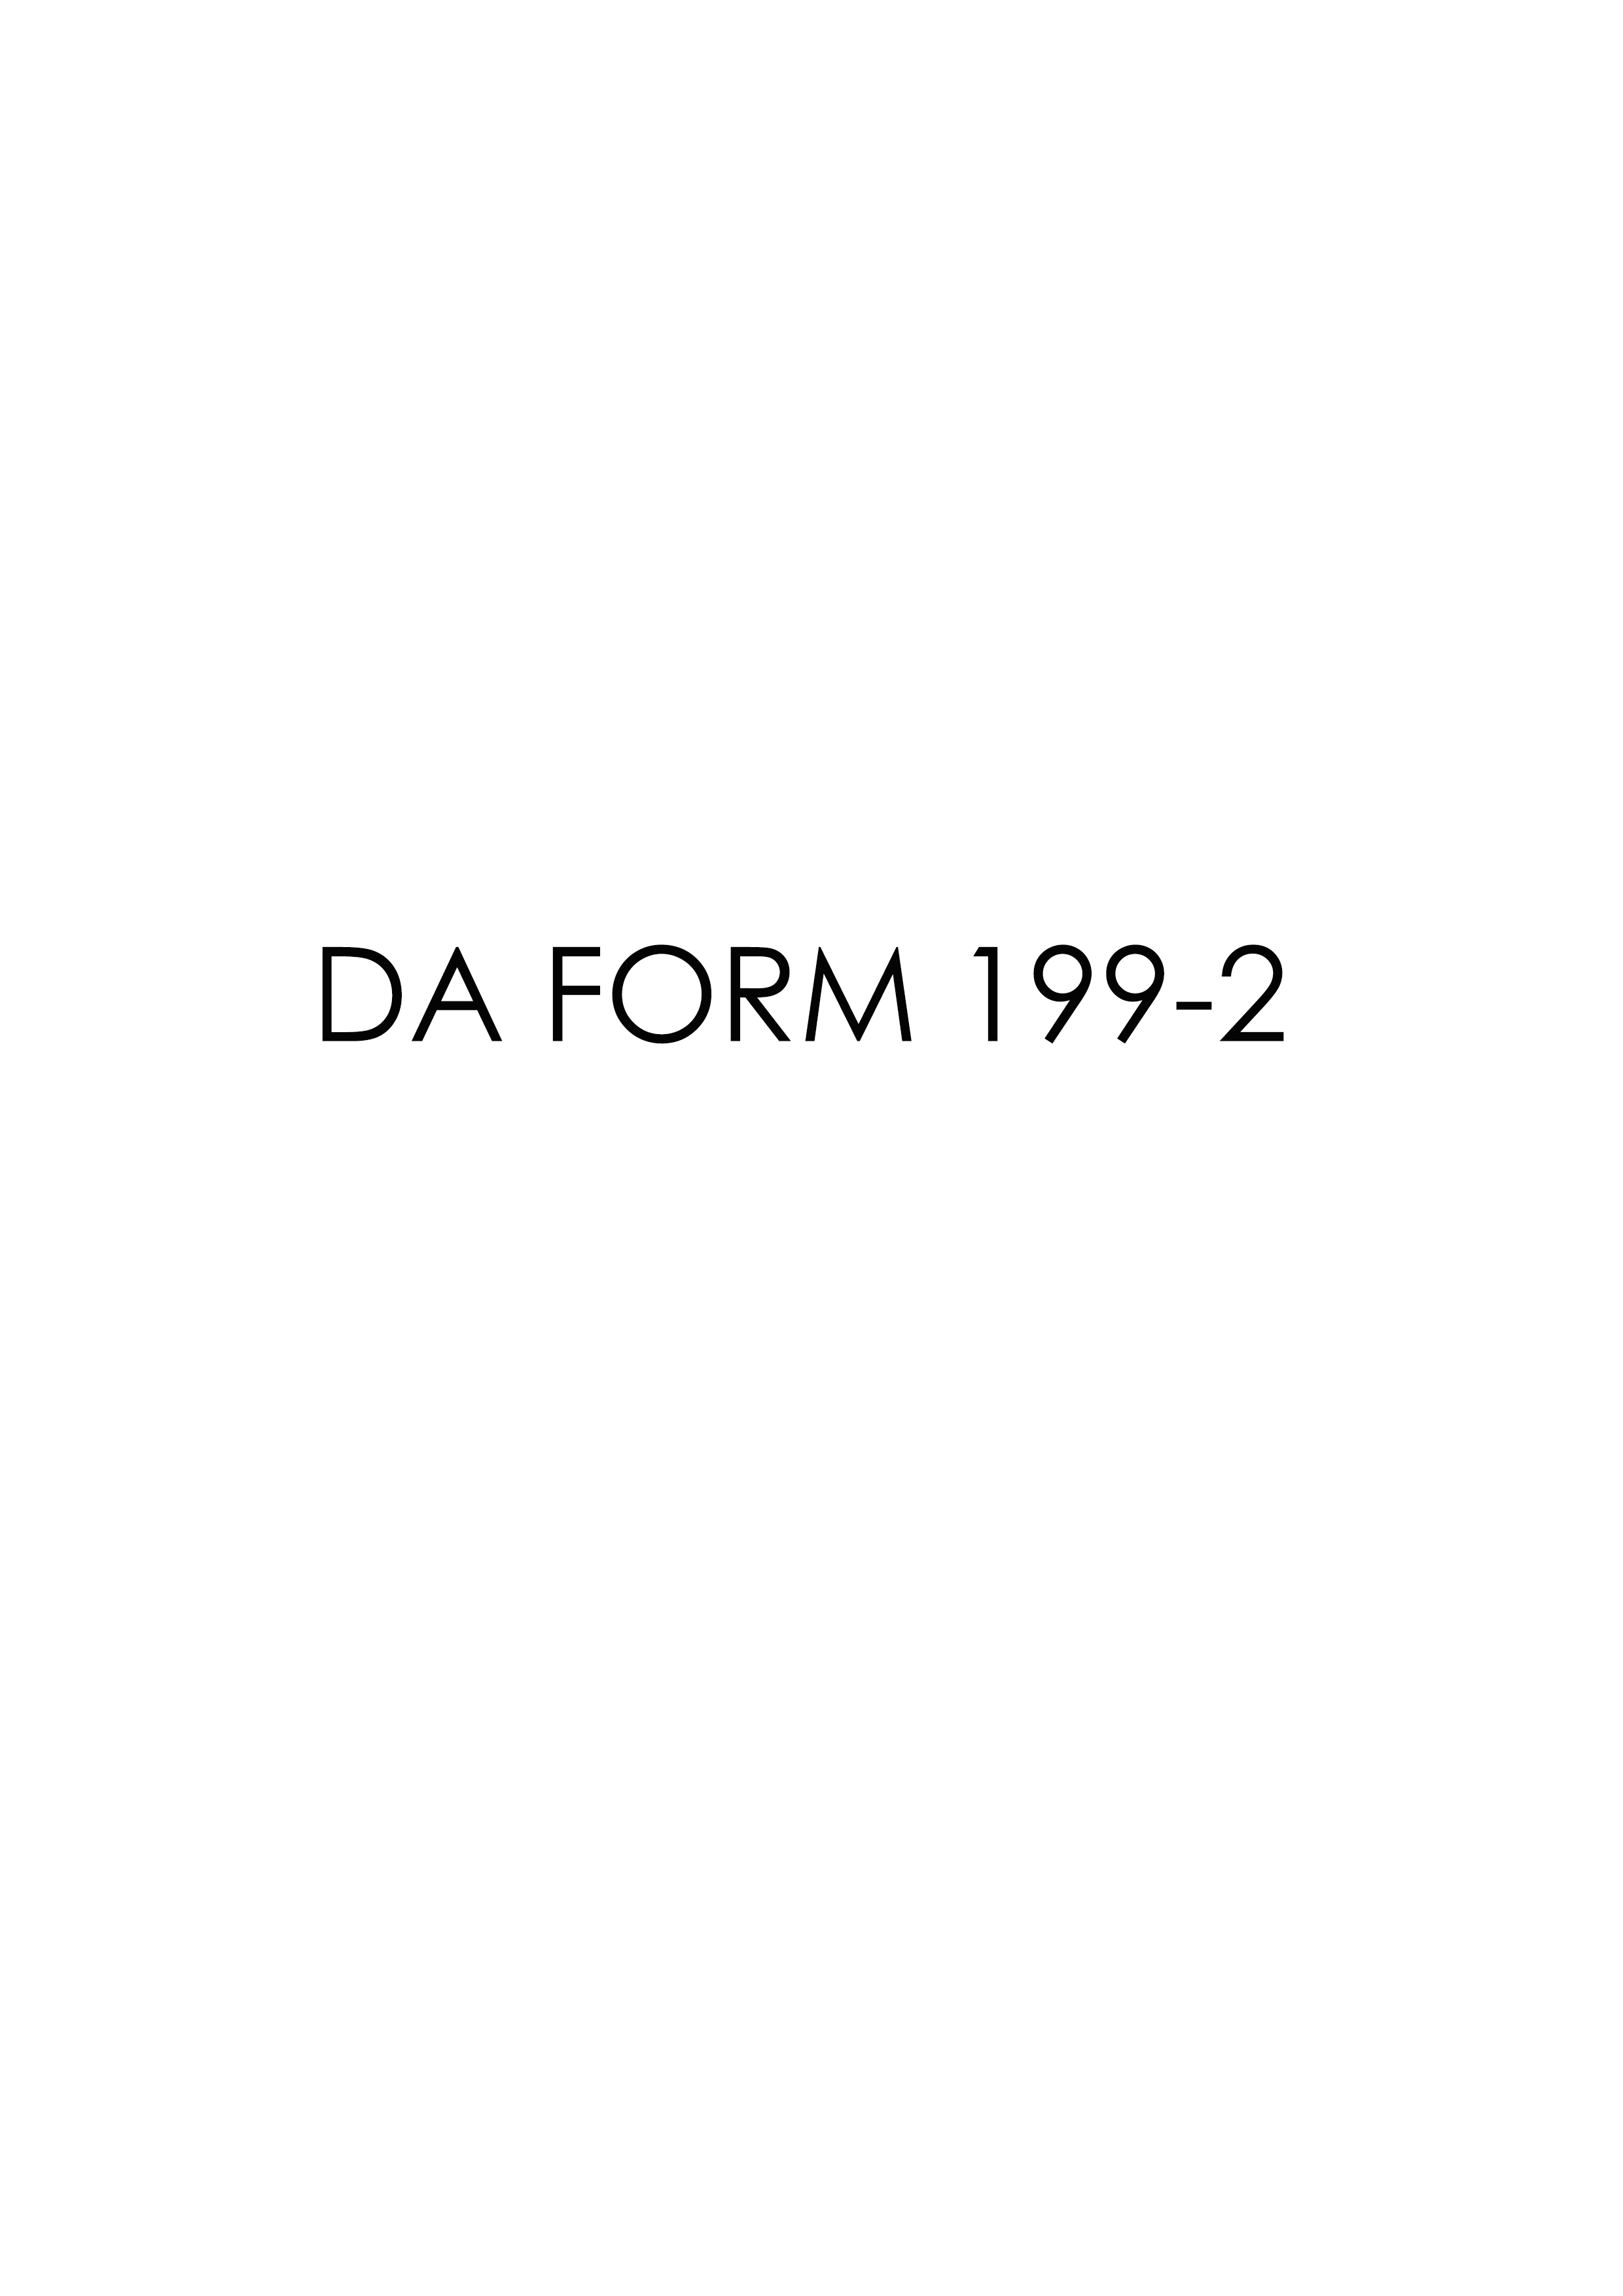 Download da 199-2 Form Free